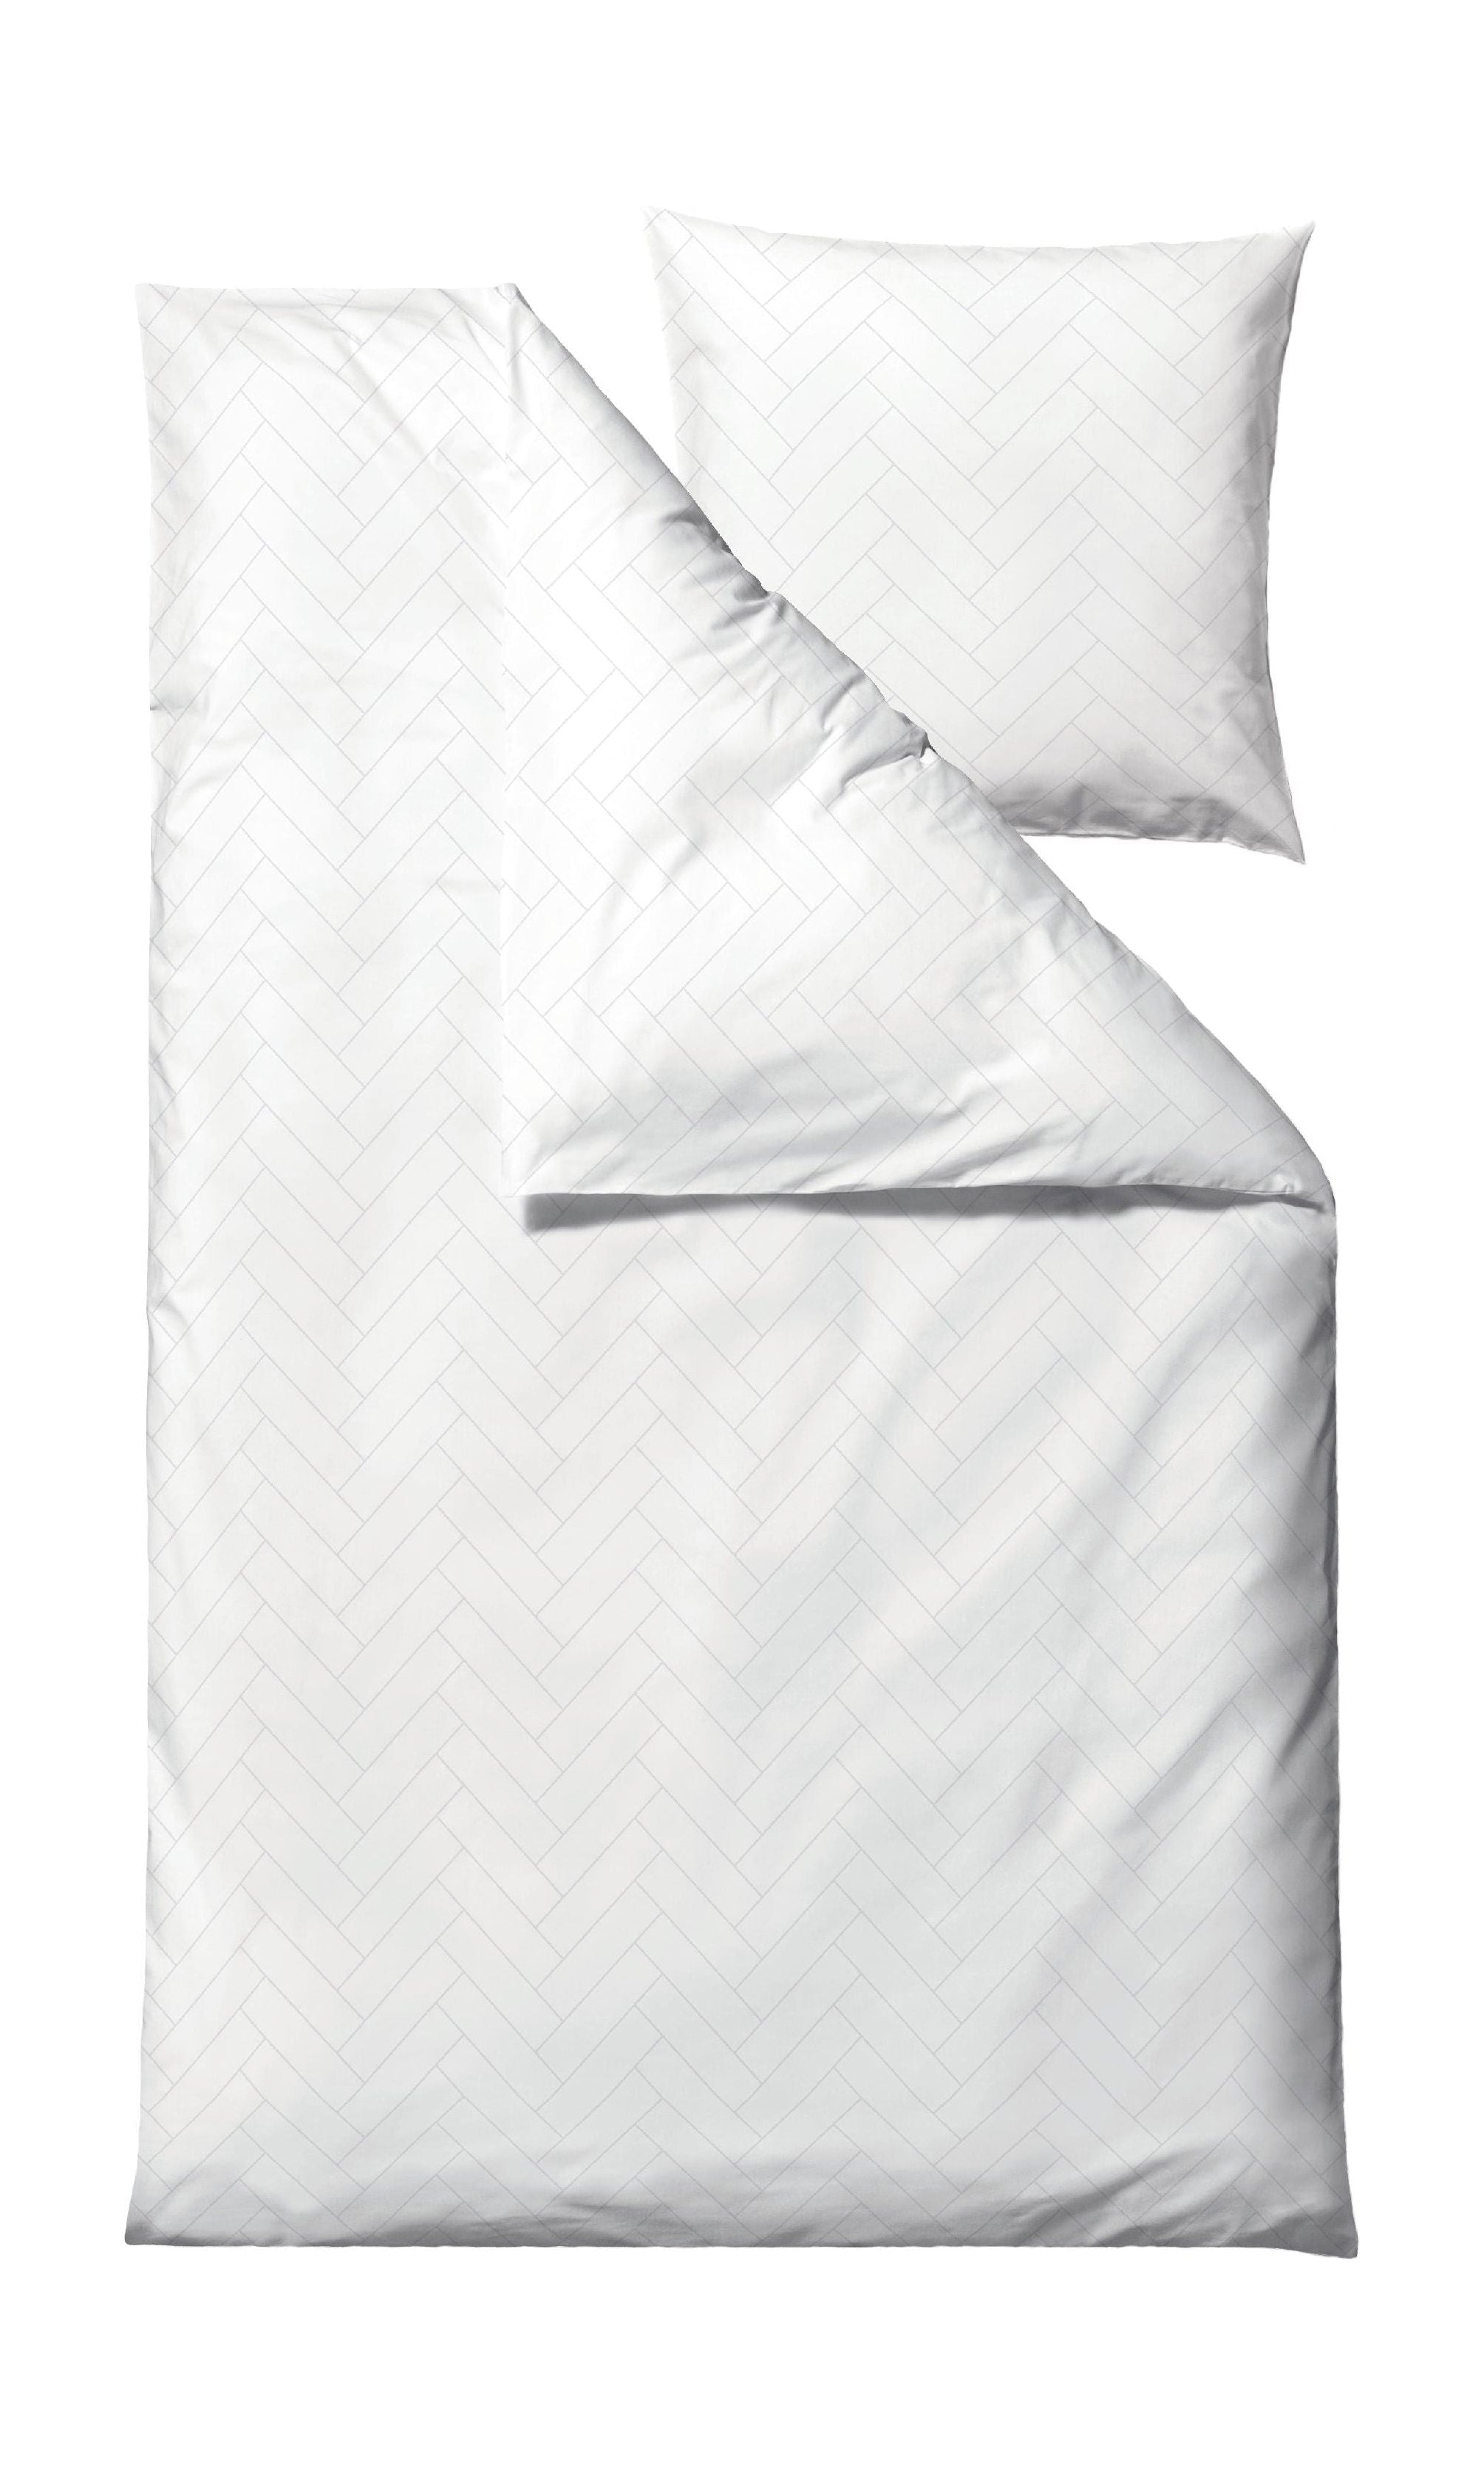 Södahl Tiles Bed Linen 140x220 cm, blanco